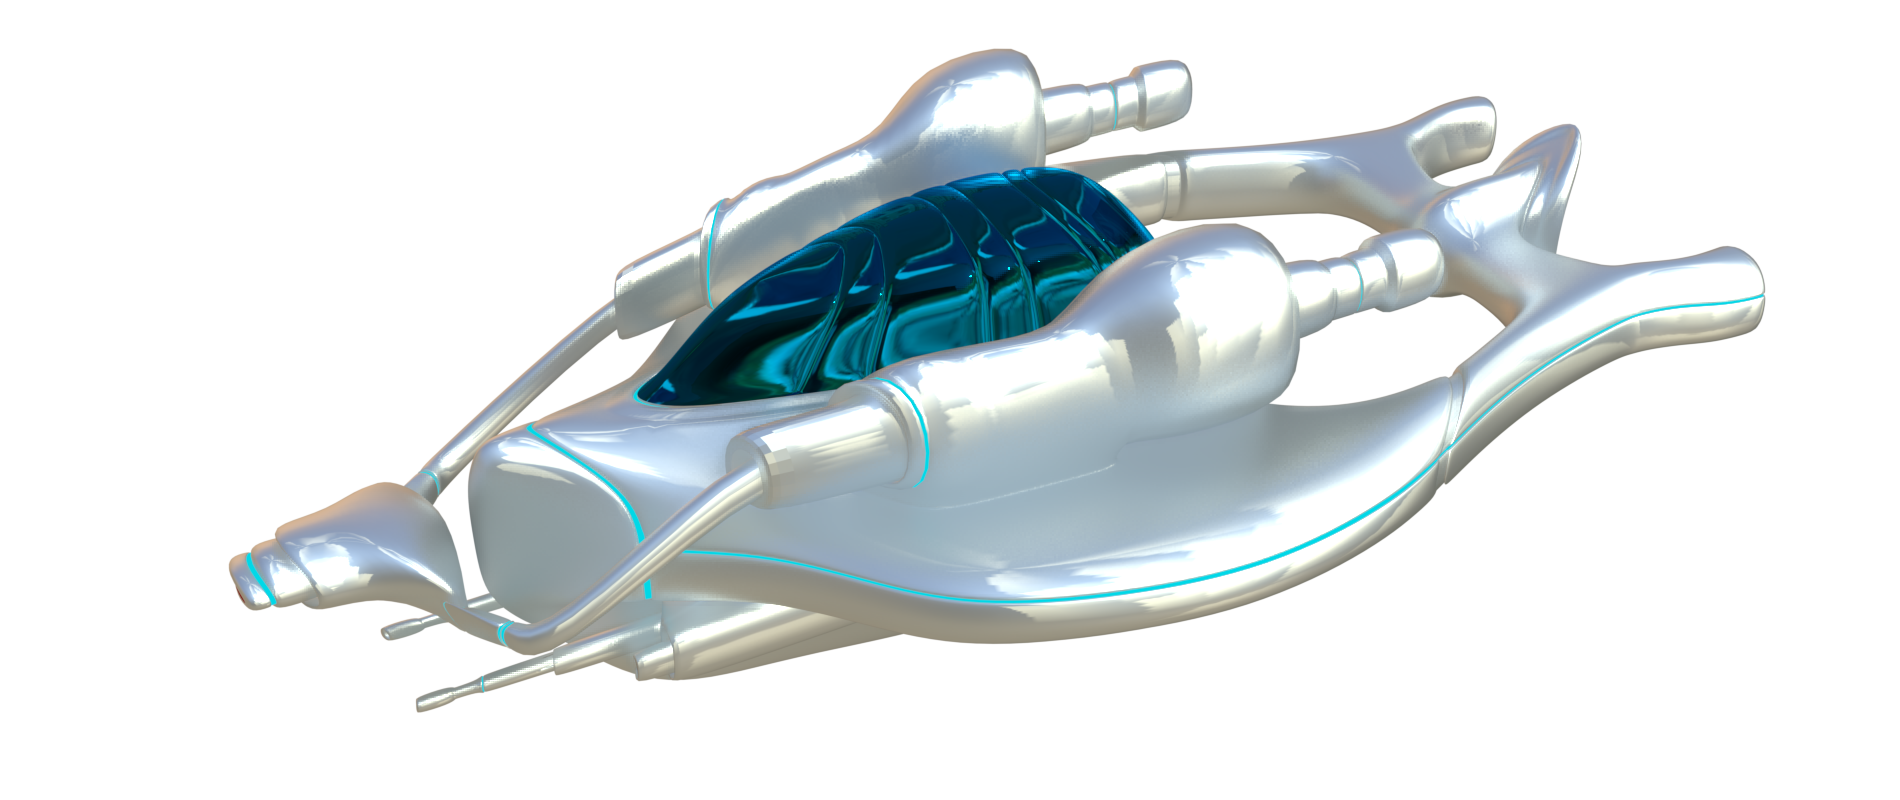 Spaceship free 3d model